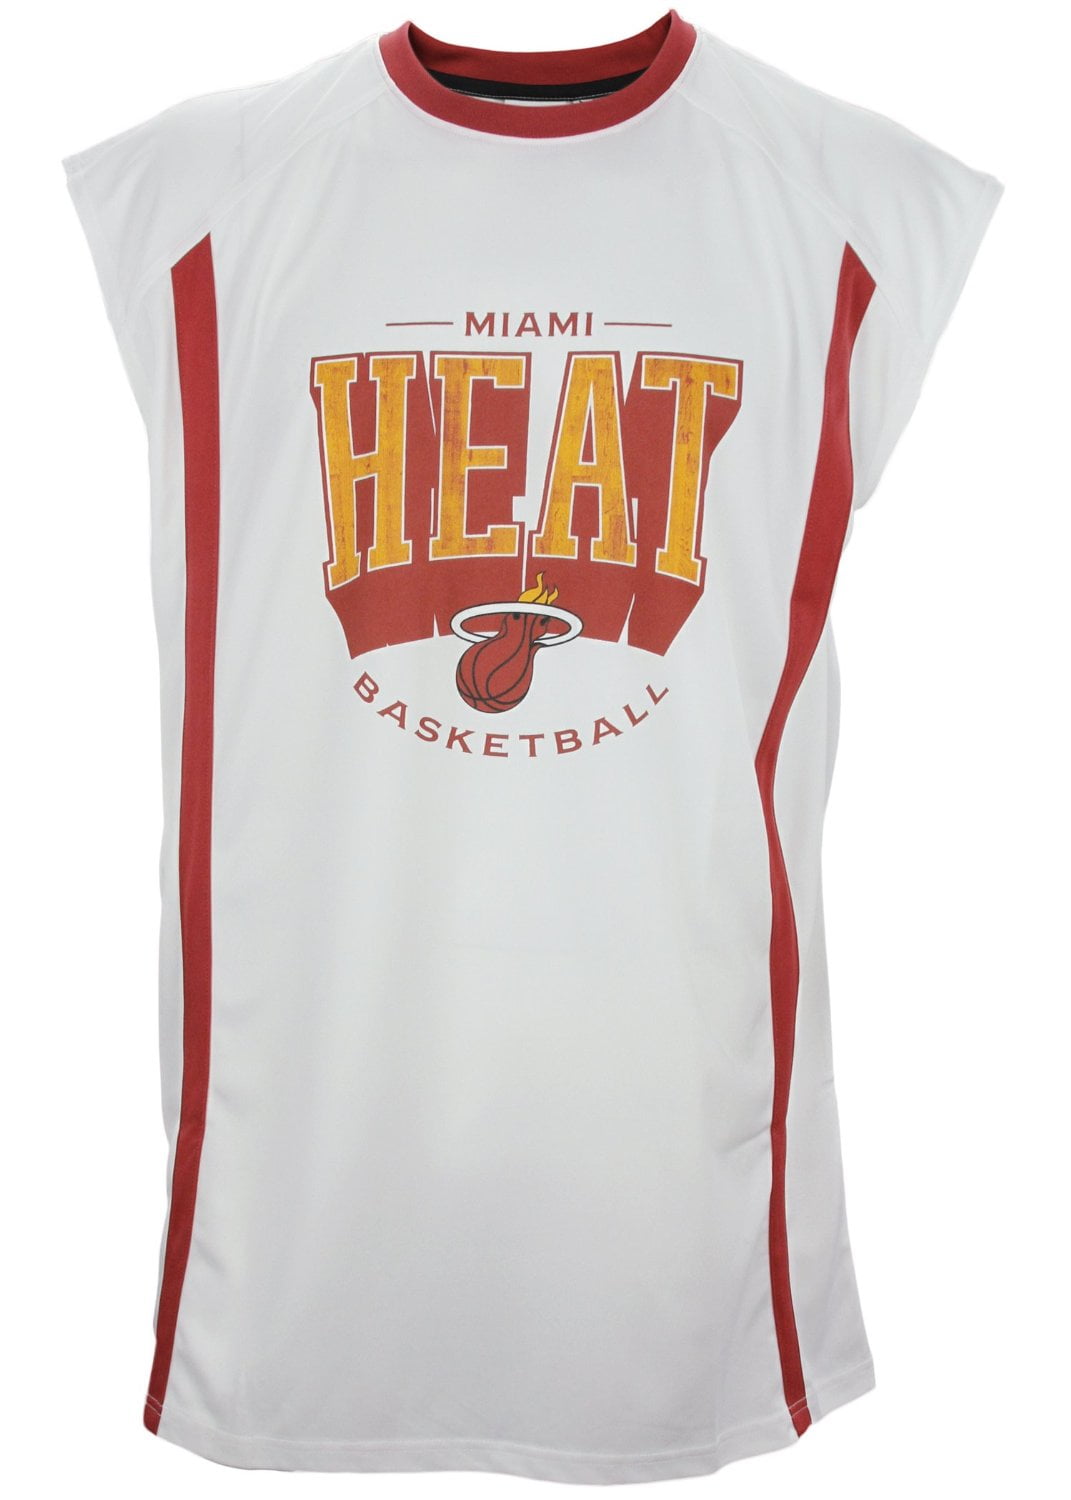 Men's Fanatics Branded White Miami Heat Team City Pride T-Shirt